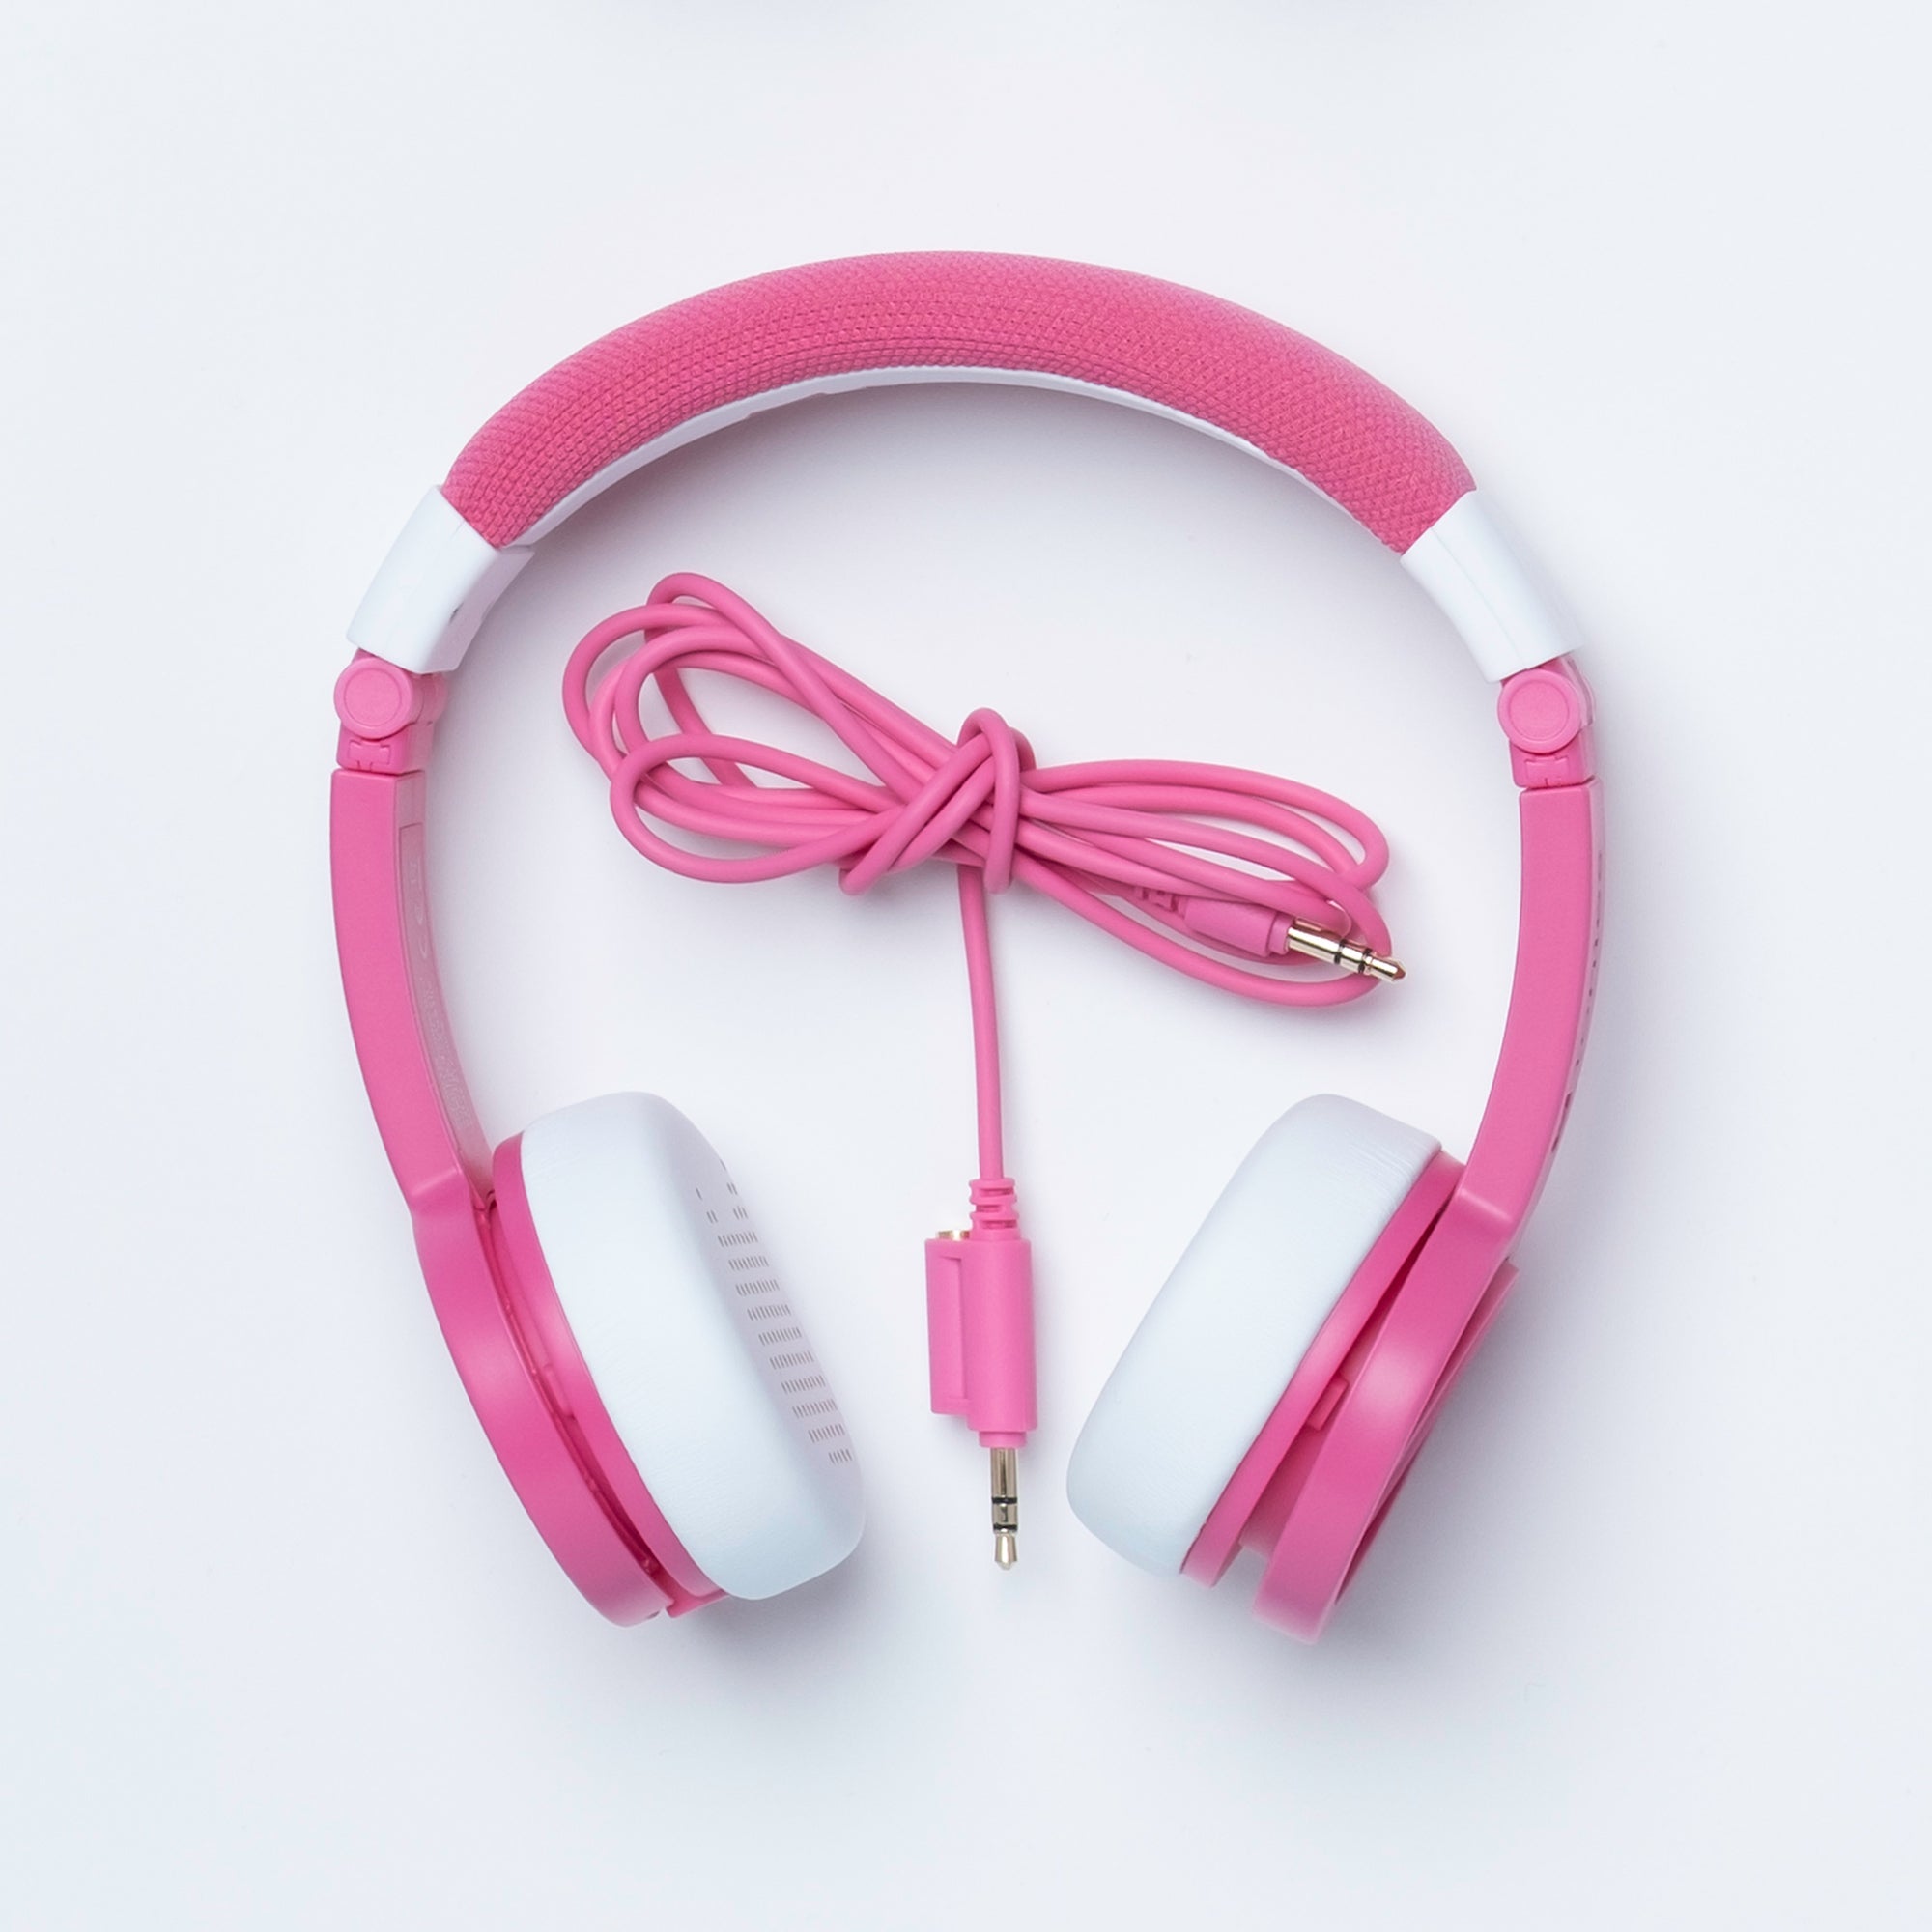 Tonies Foldable Headphones - ANB Baby -840173600313$20 - $50